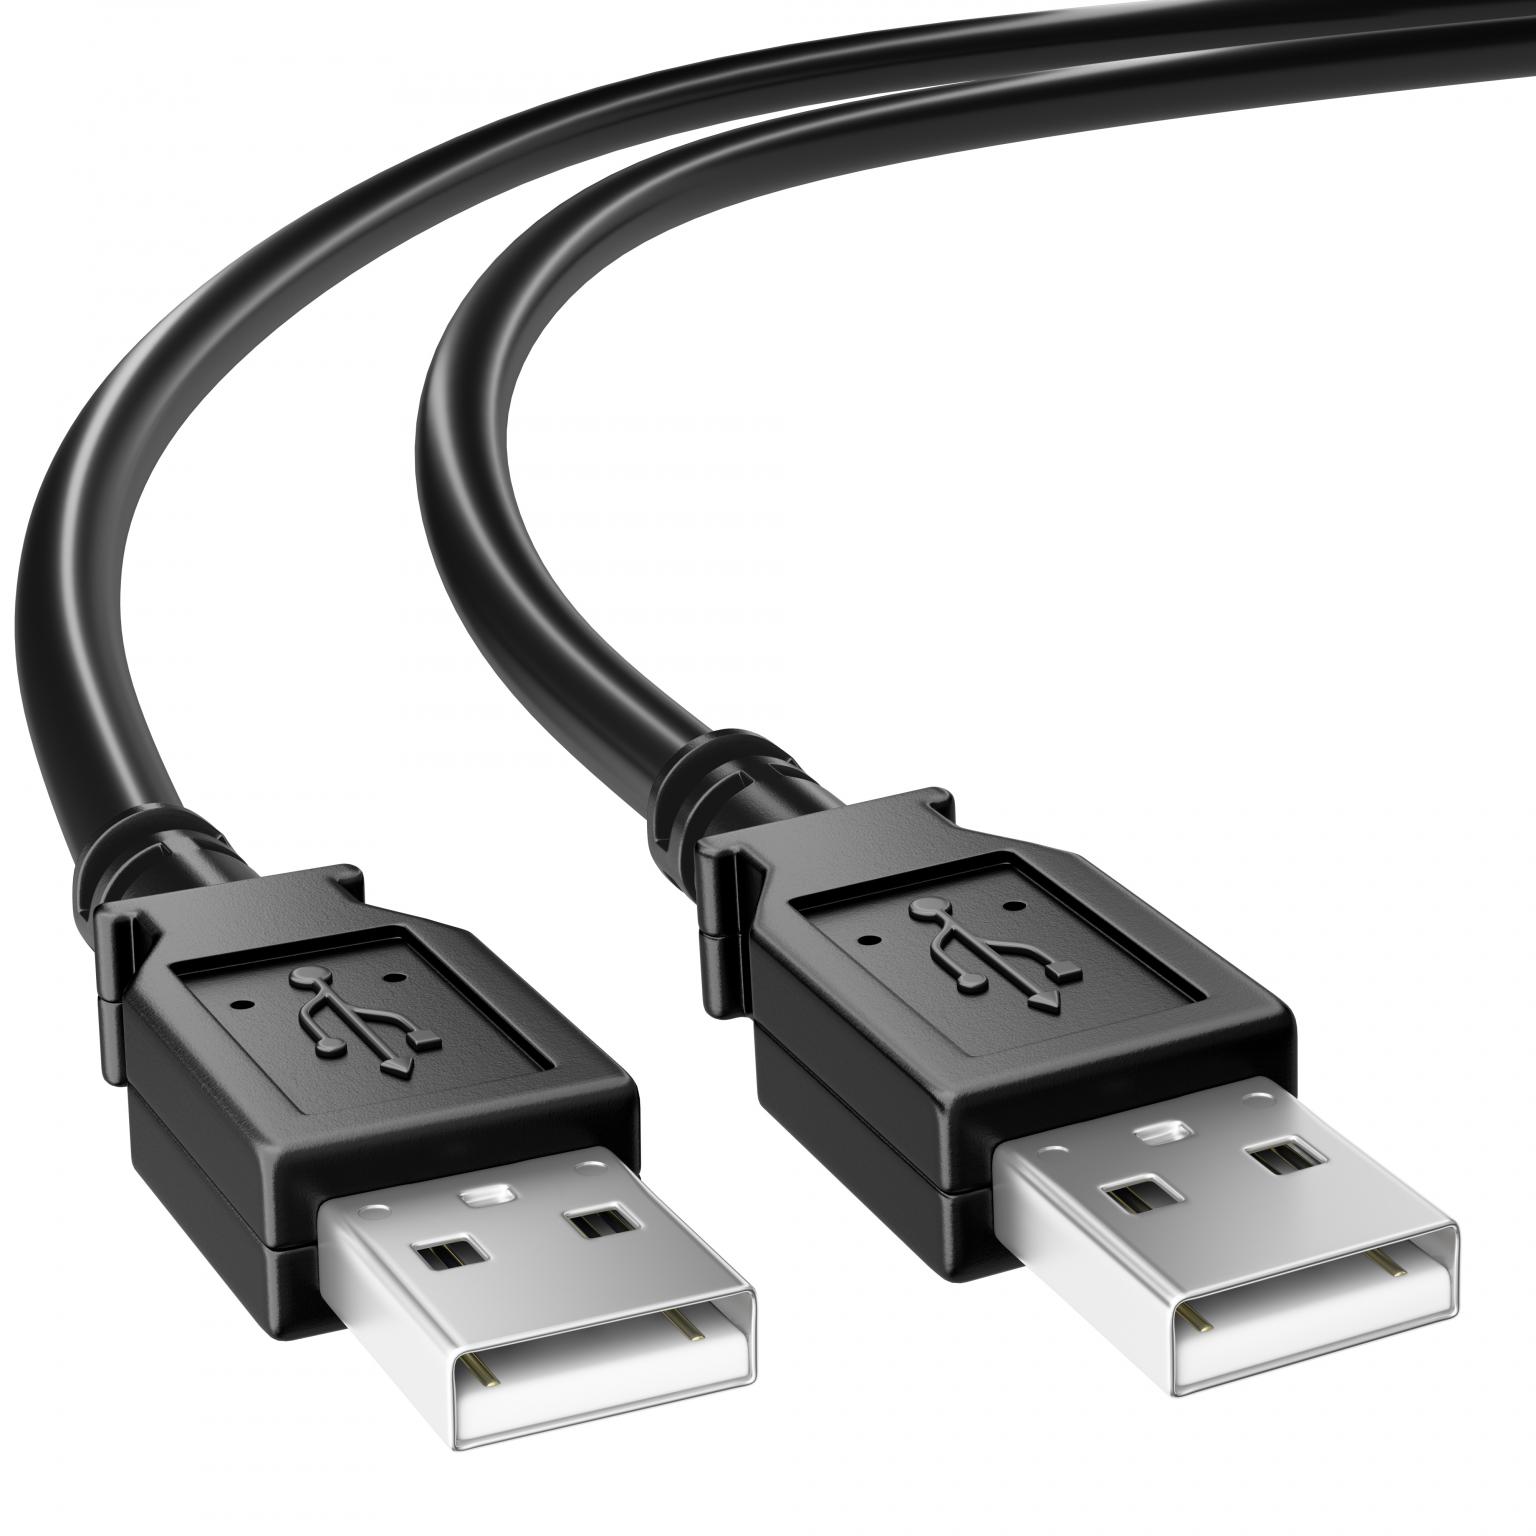 reservoir Heerlijk Botsing USB 2.0 Kabel - USB 2.0 kabel, Connector 1: USB A male, Connector 2: USB A  male, 3 meter.